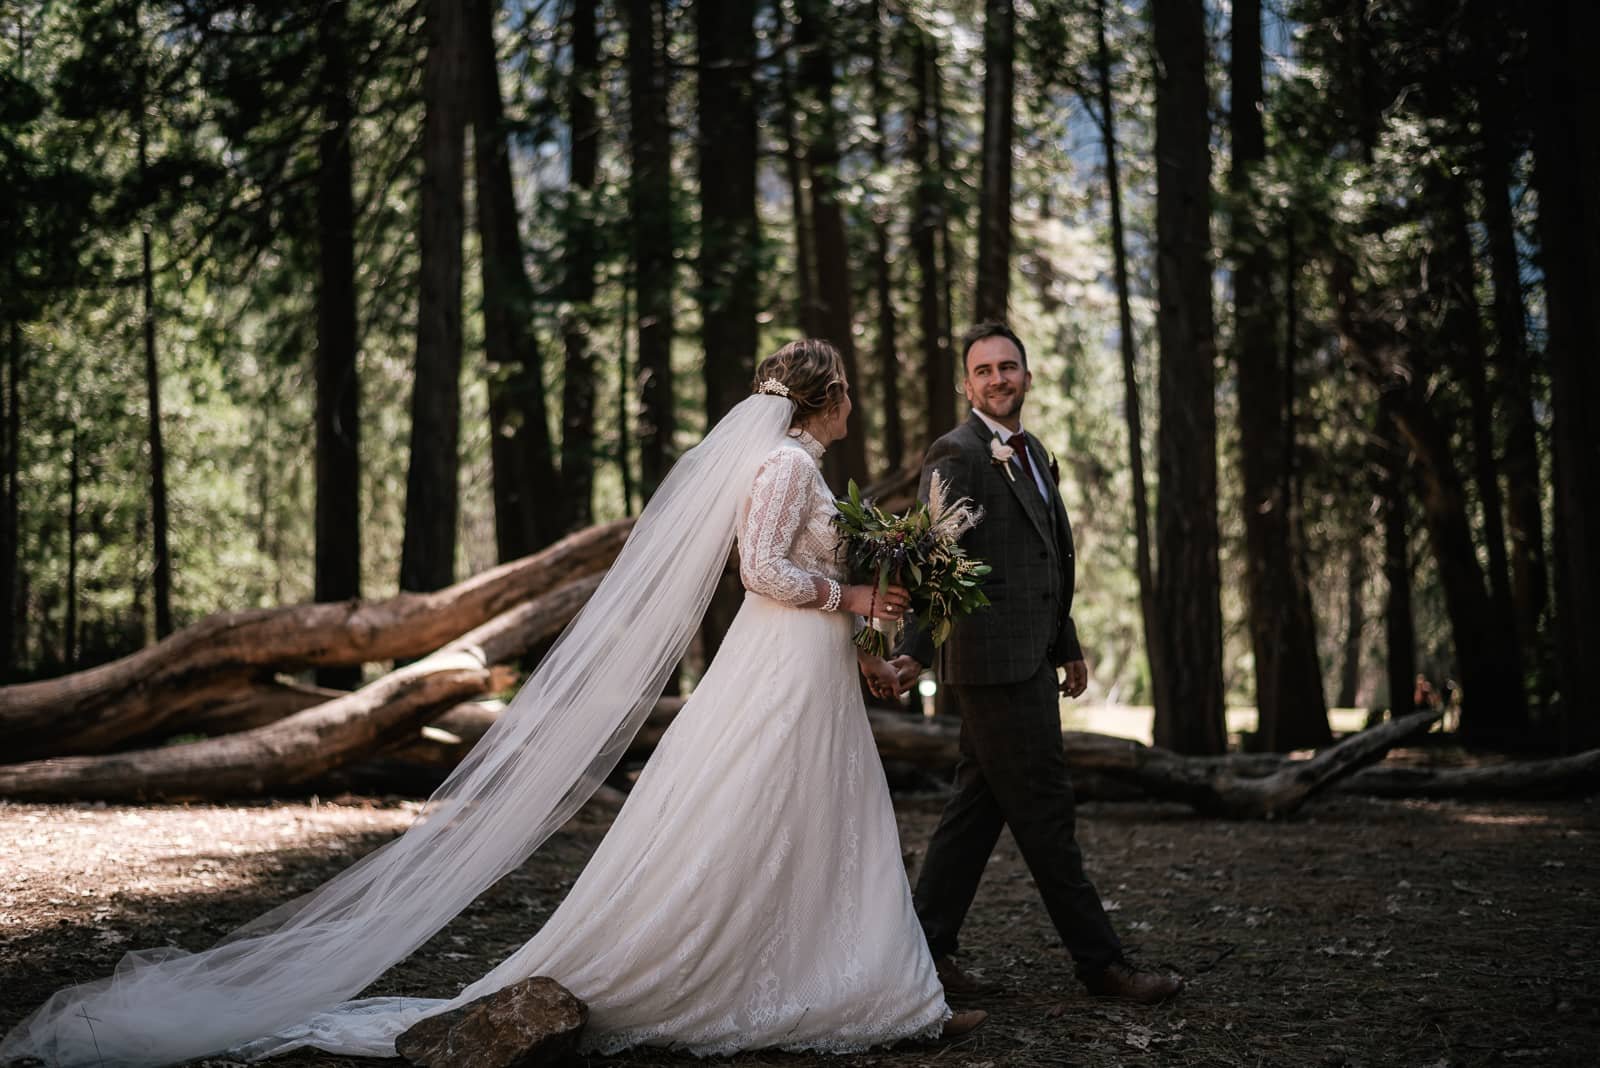 Pearl Wedding Veil in Woodland Elopement - Rock My Wedding